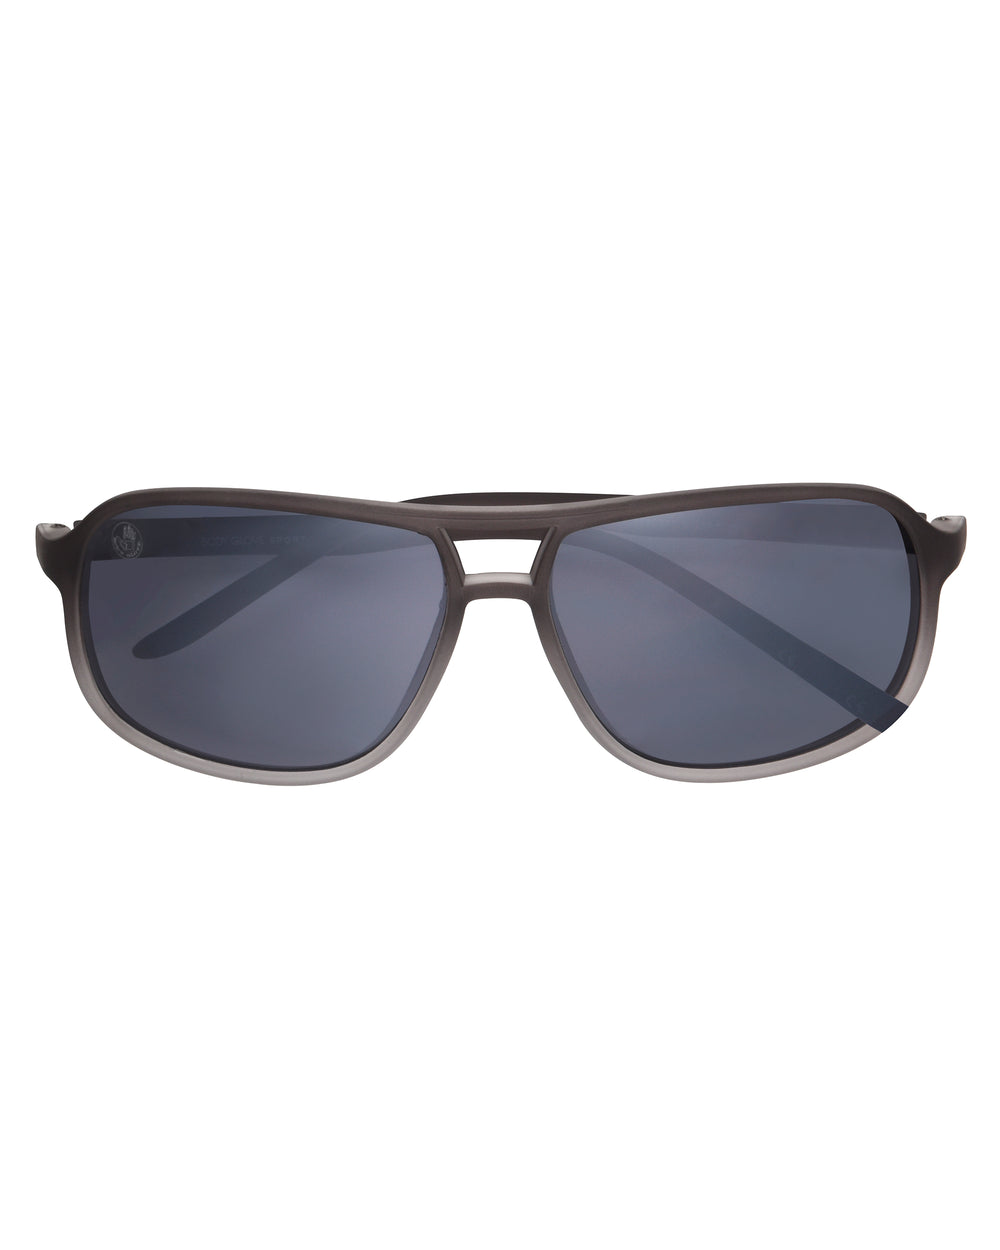 Donnie Aviator Sunglasses - Gray